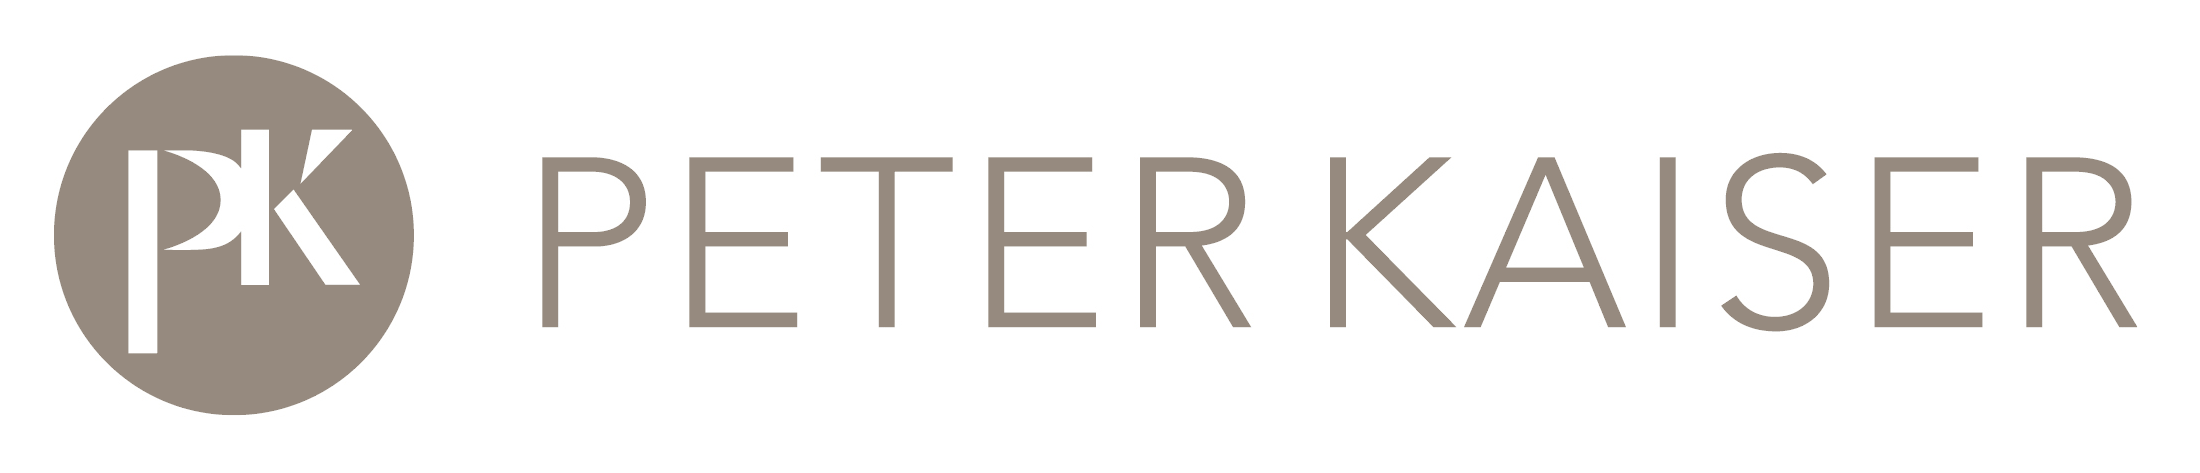 Premier vaak offset Peter Kaiser – Logos Download